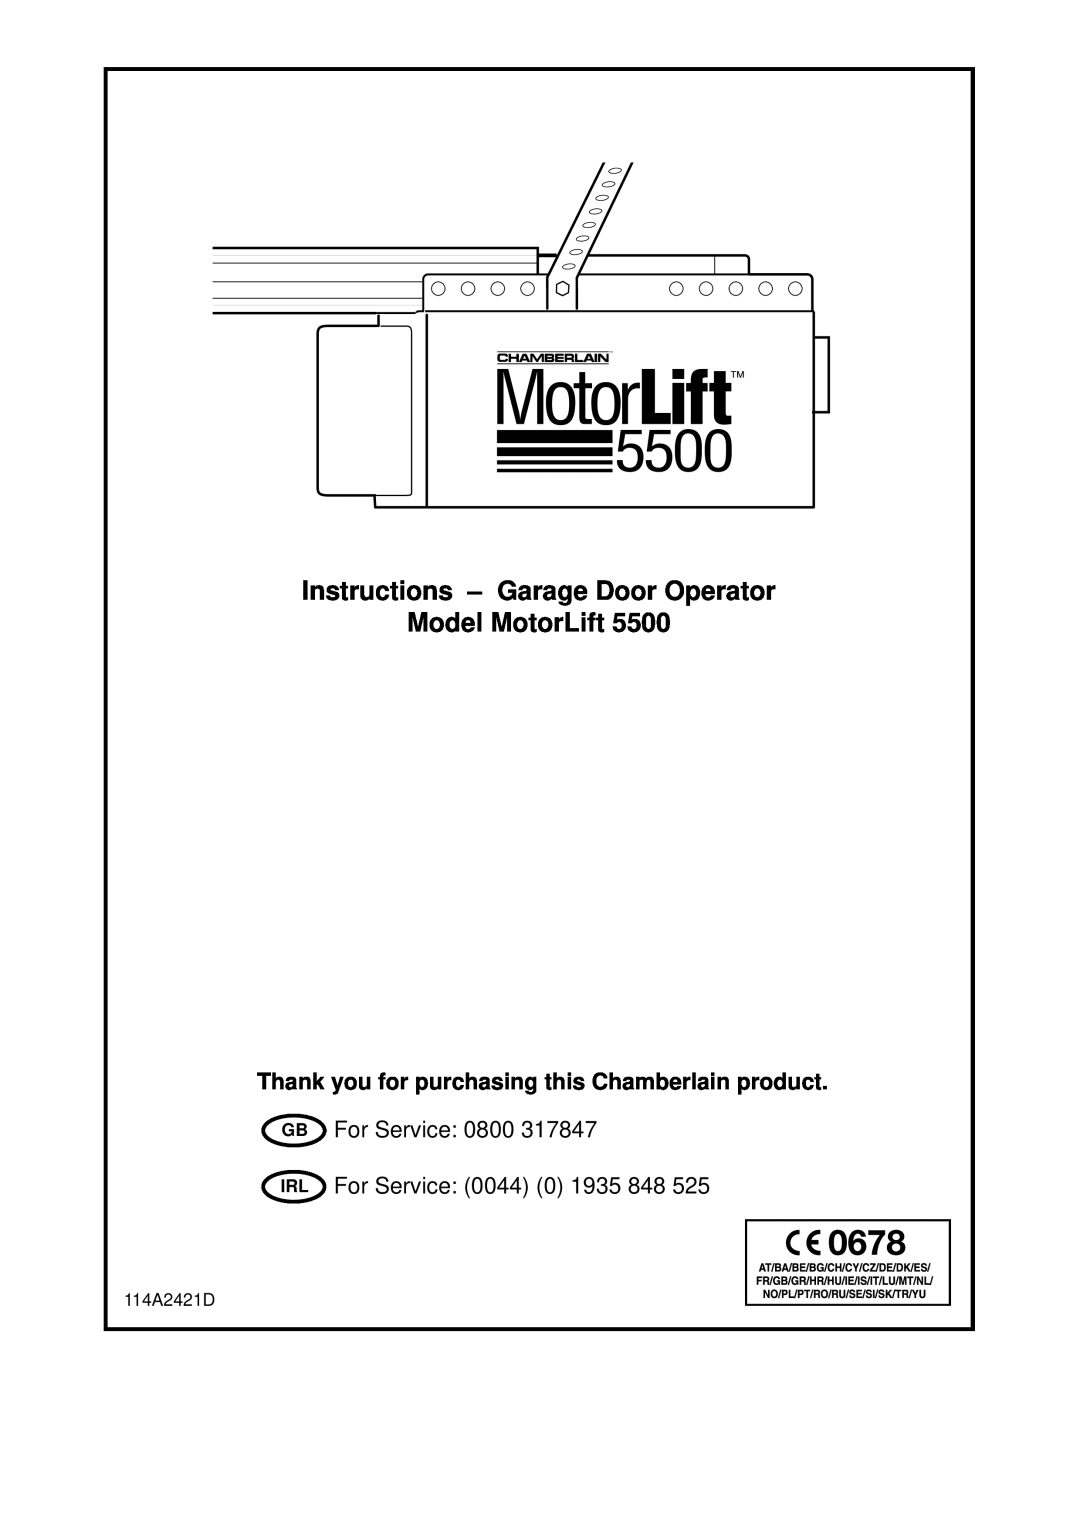 Chamberlain ML5500 manual 114A2421D, Instructions - Garage Door Operator Model MotorLift 